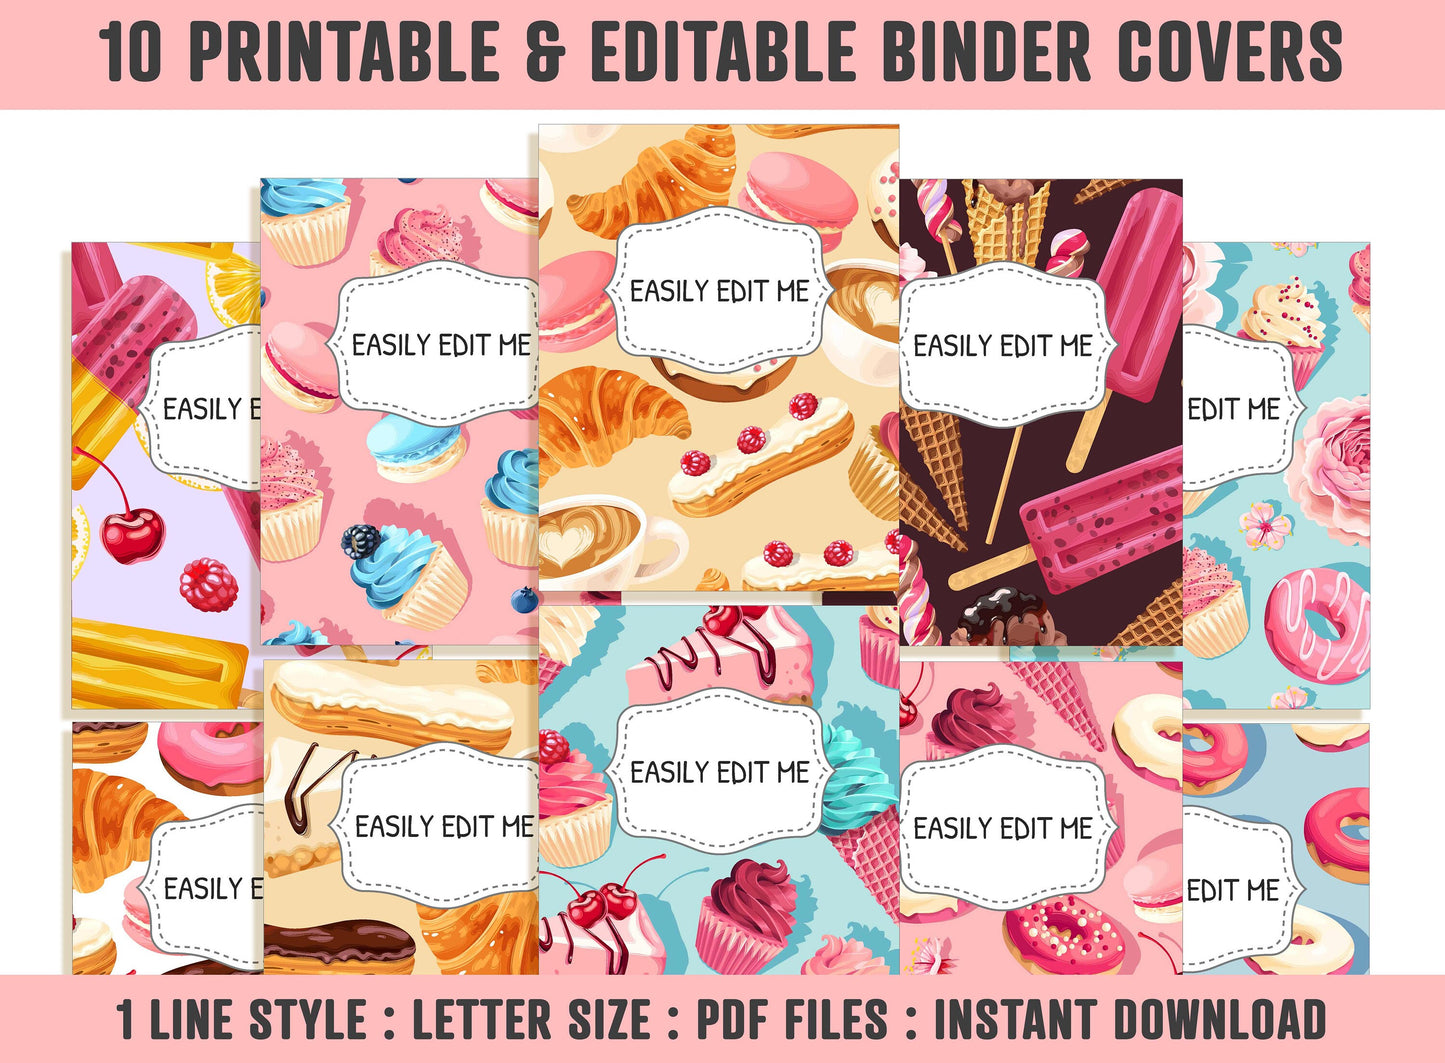 Food Binder Cover, 10 Printable & Editable Binder Covers+Spines, Teacher/School Binder, Planner Cover Template, Binder Insert, Croissant PDF